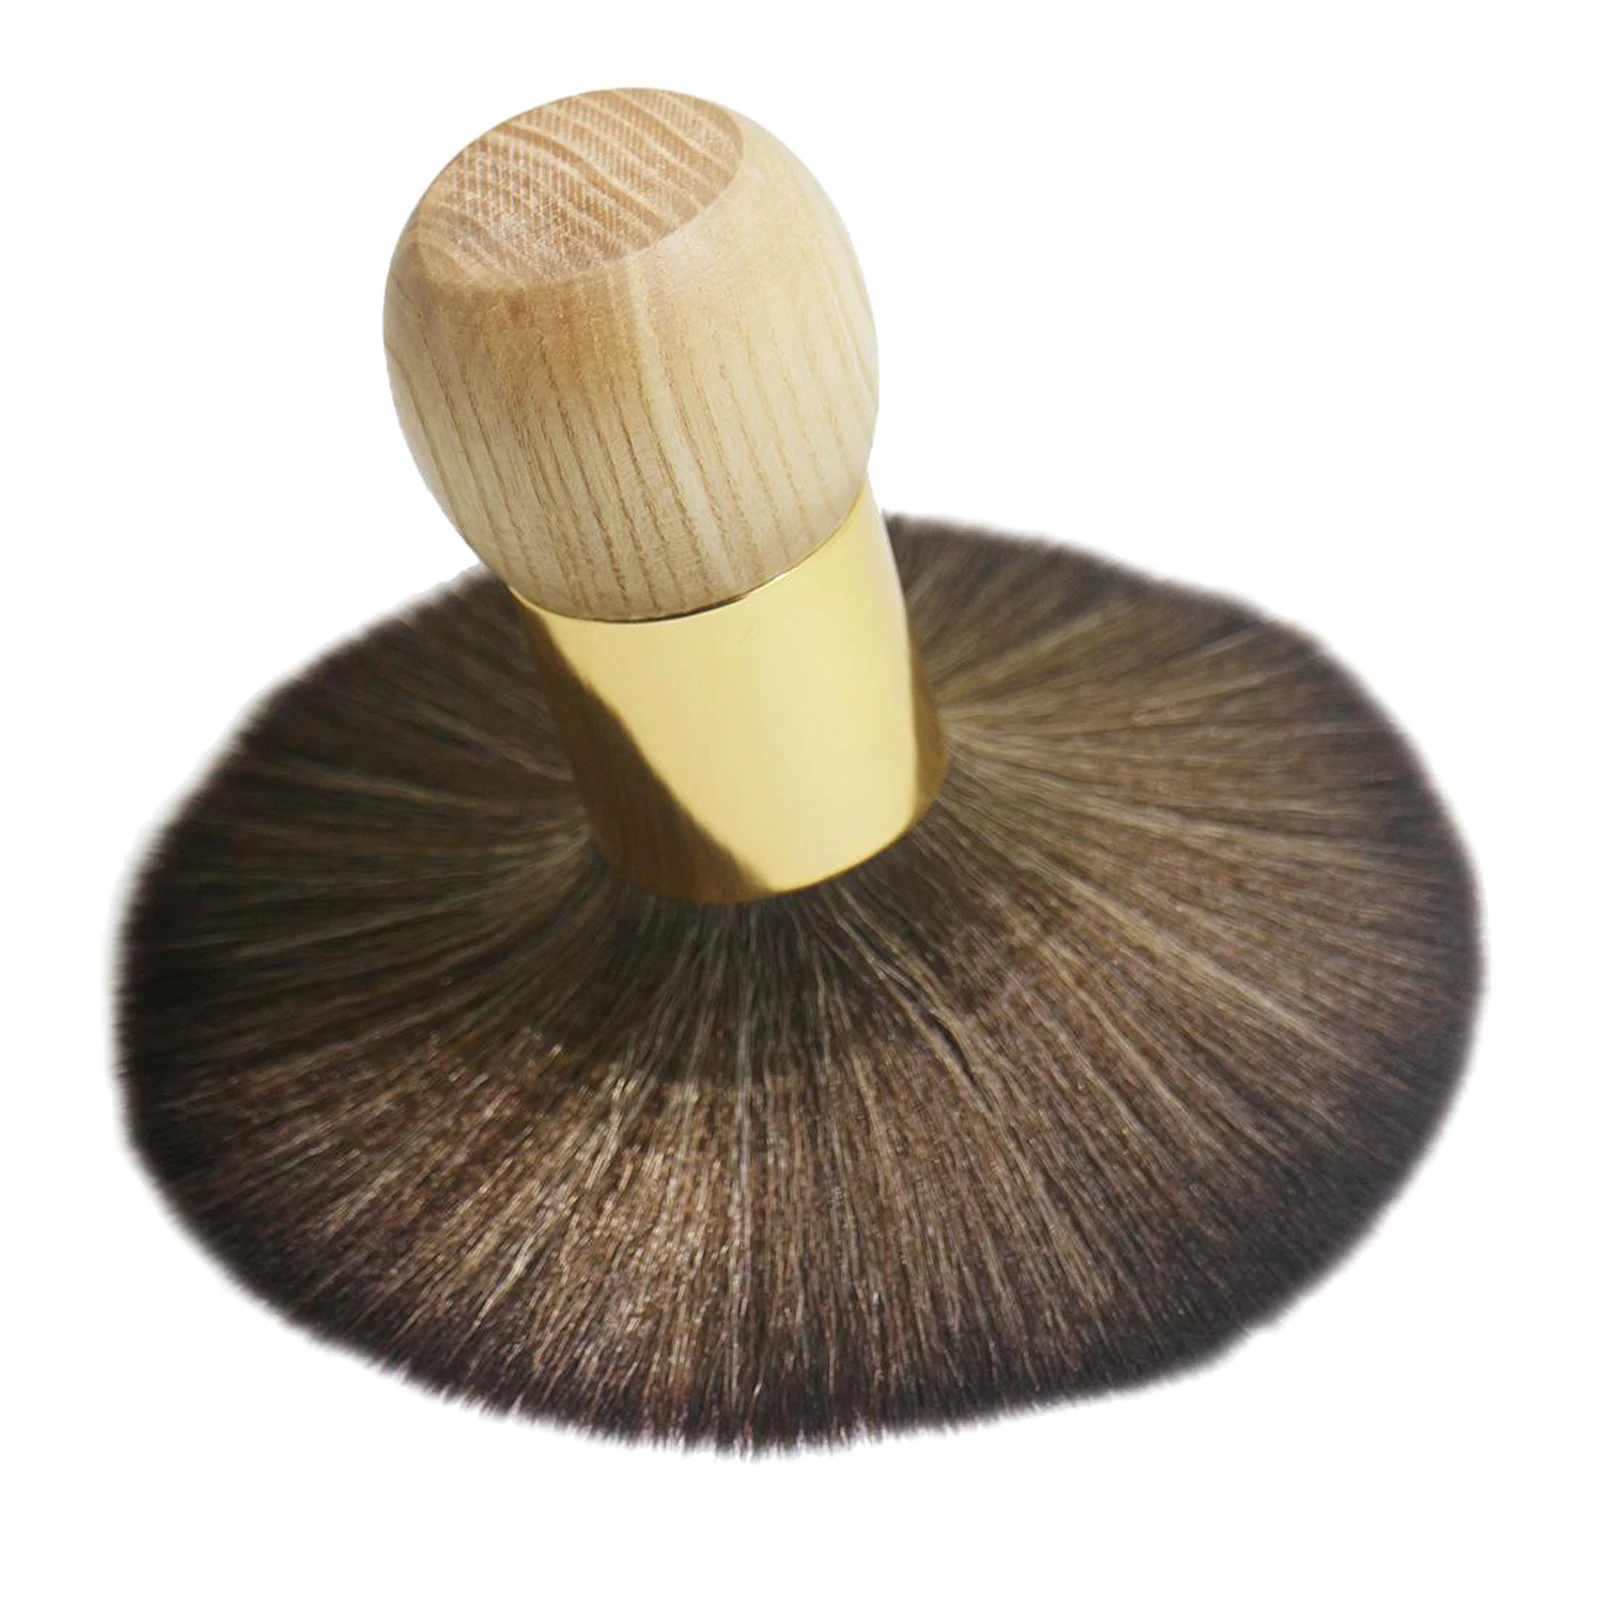 Professional Wooden Neck Duster Brush Hairbrush for Barber Styling Tool